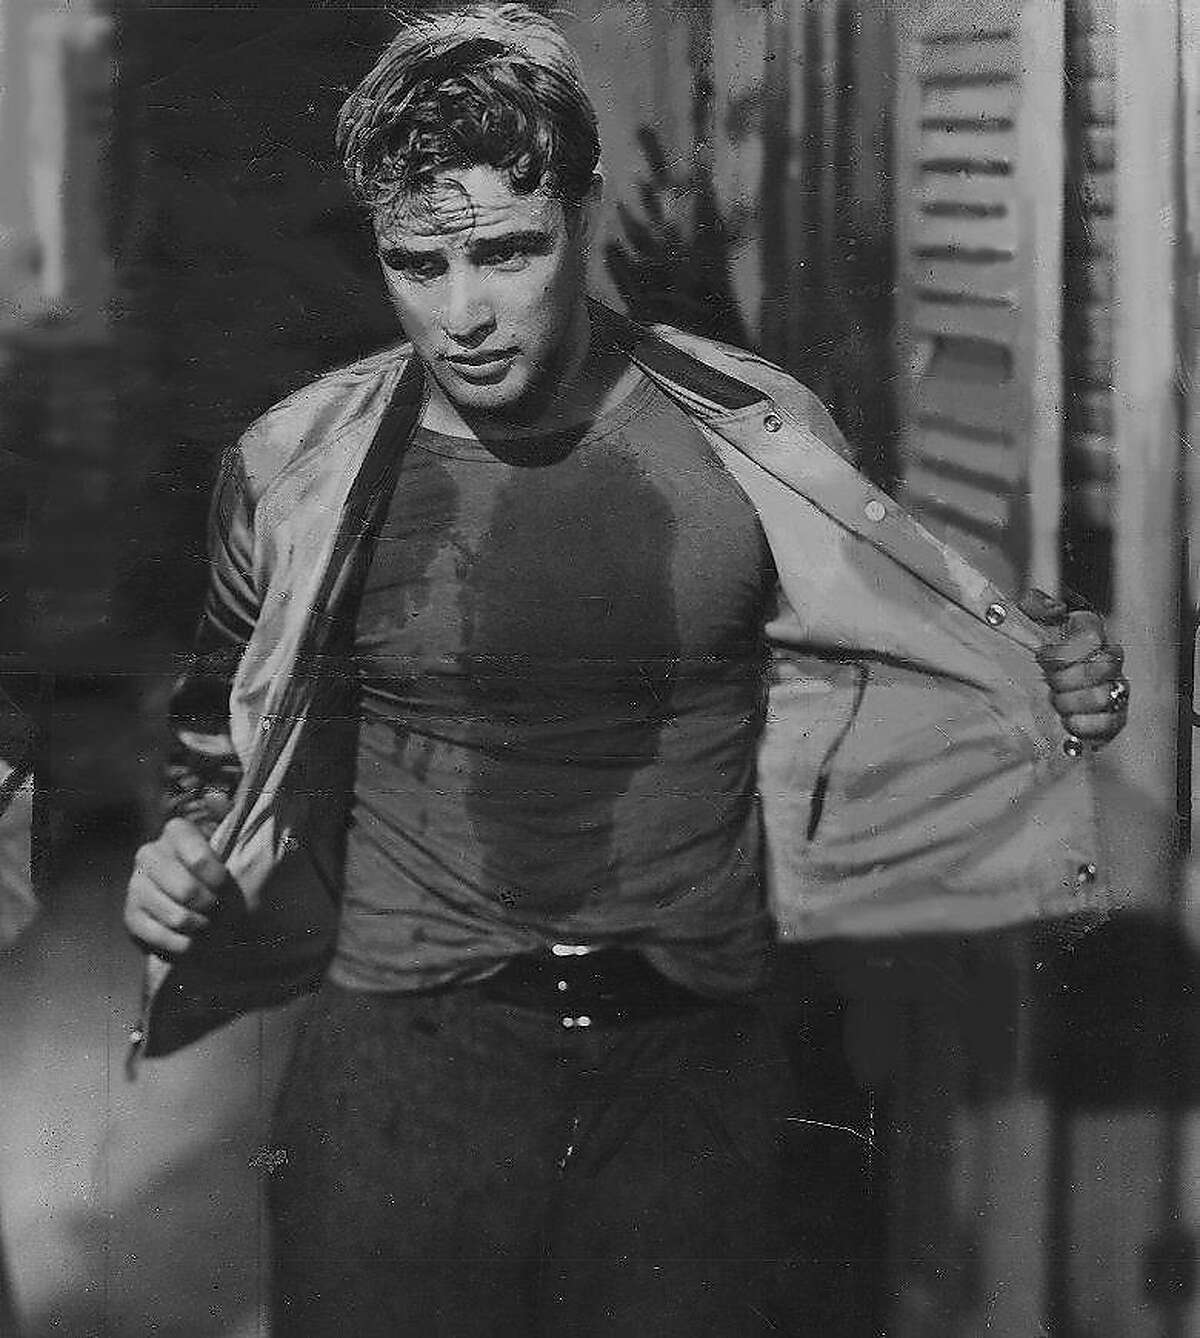 Marlon Brando in "A Streetcar Named Desire" (1951).